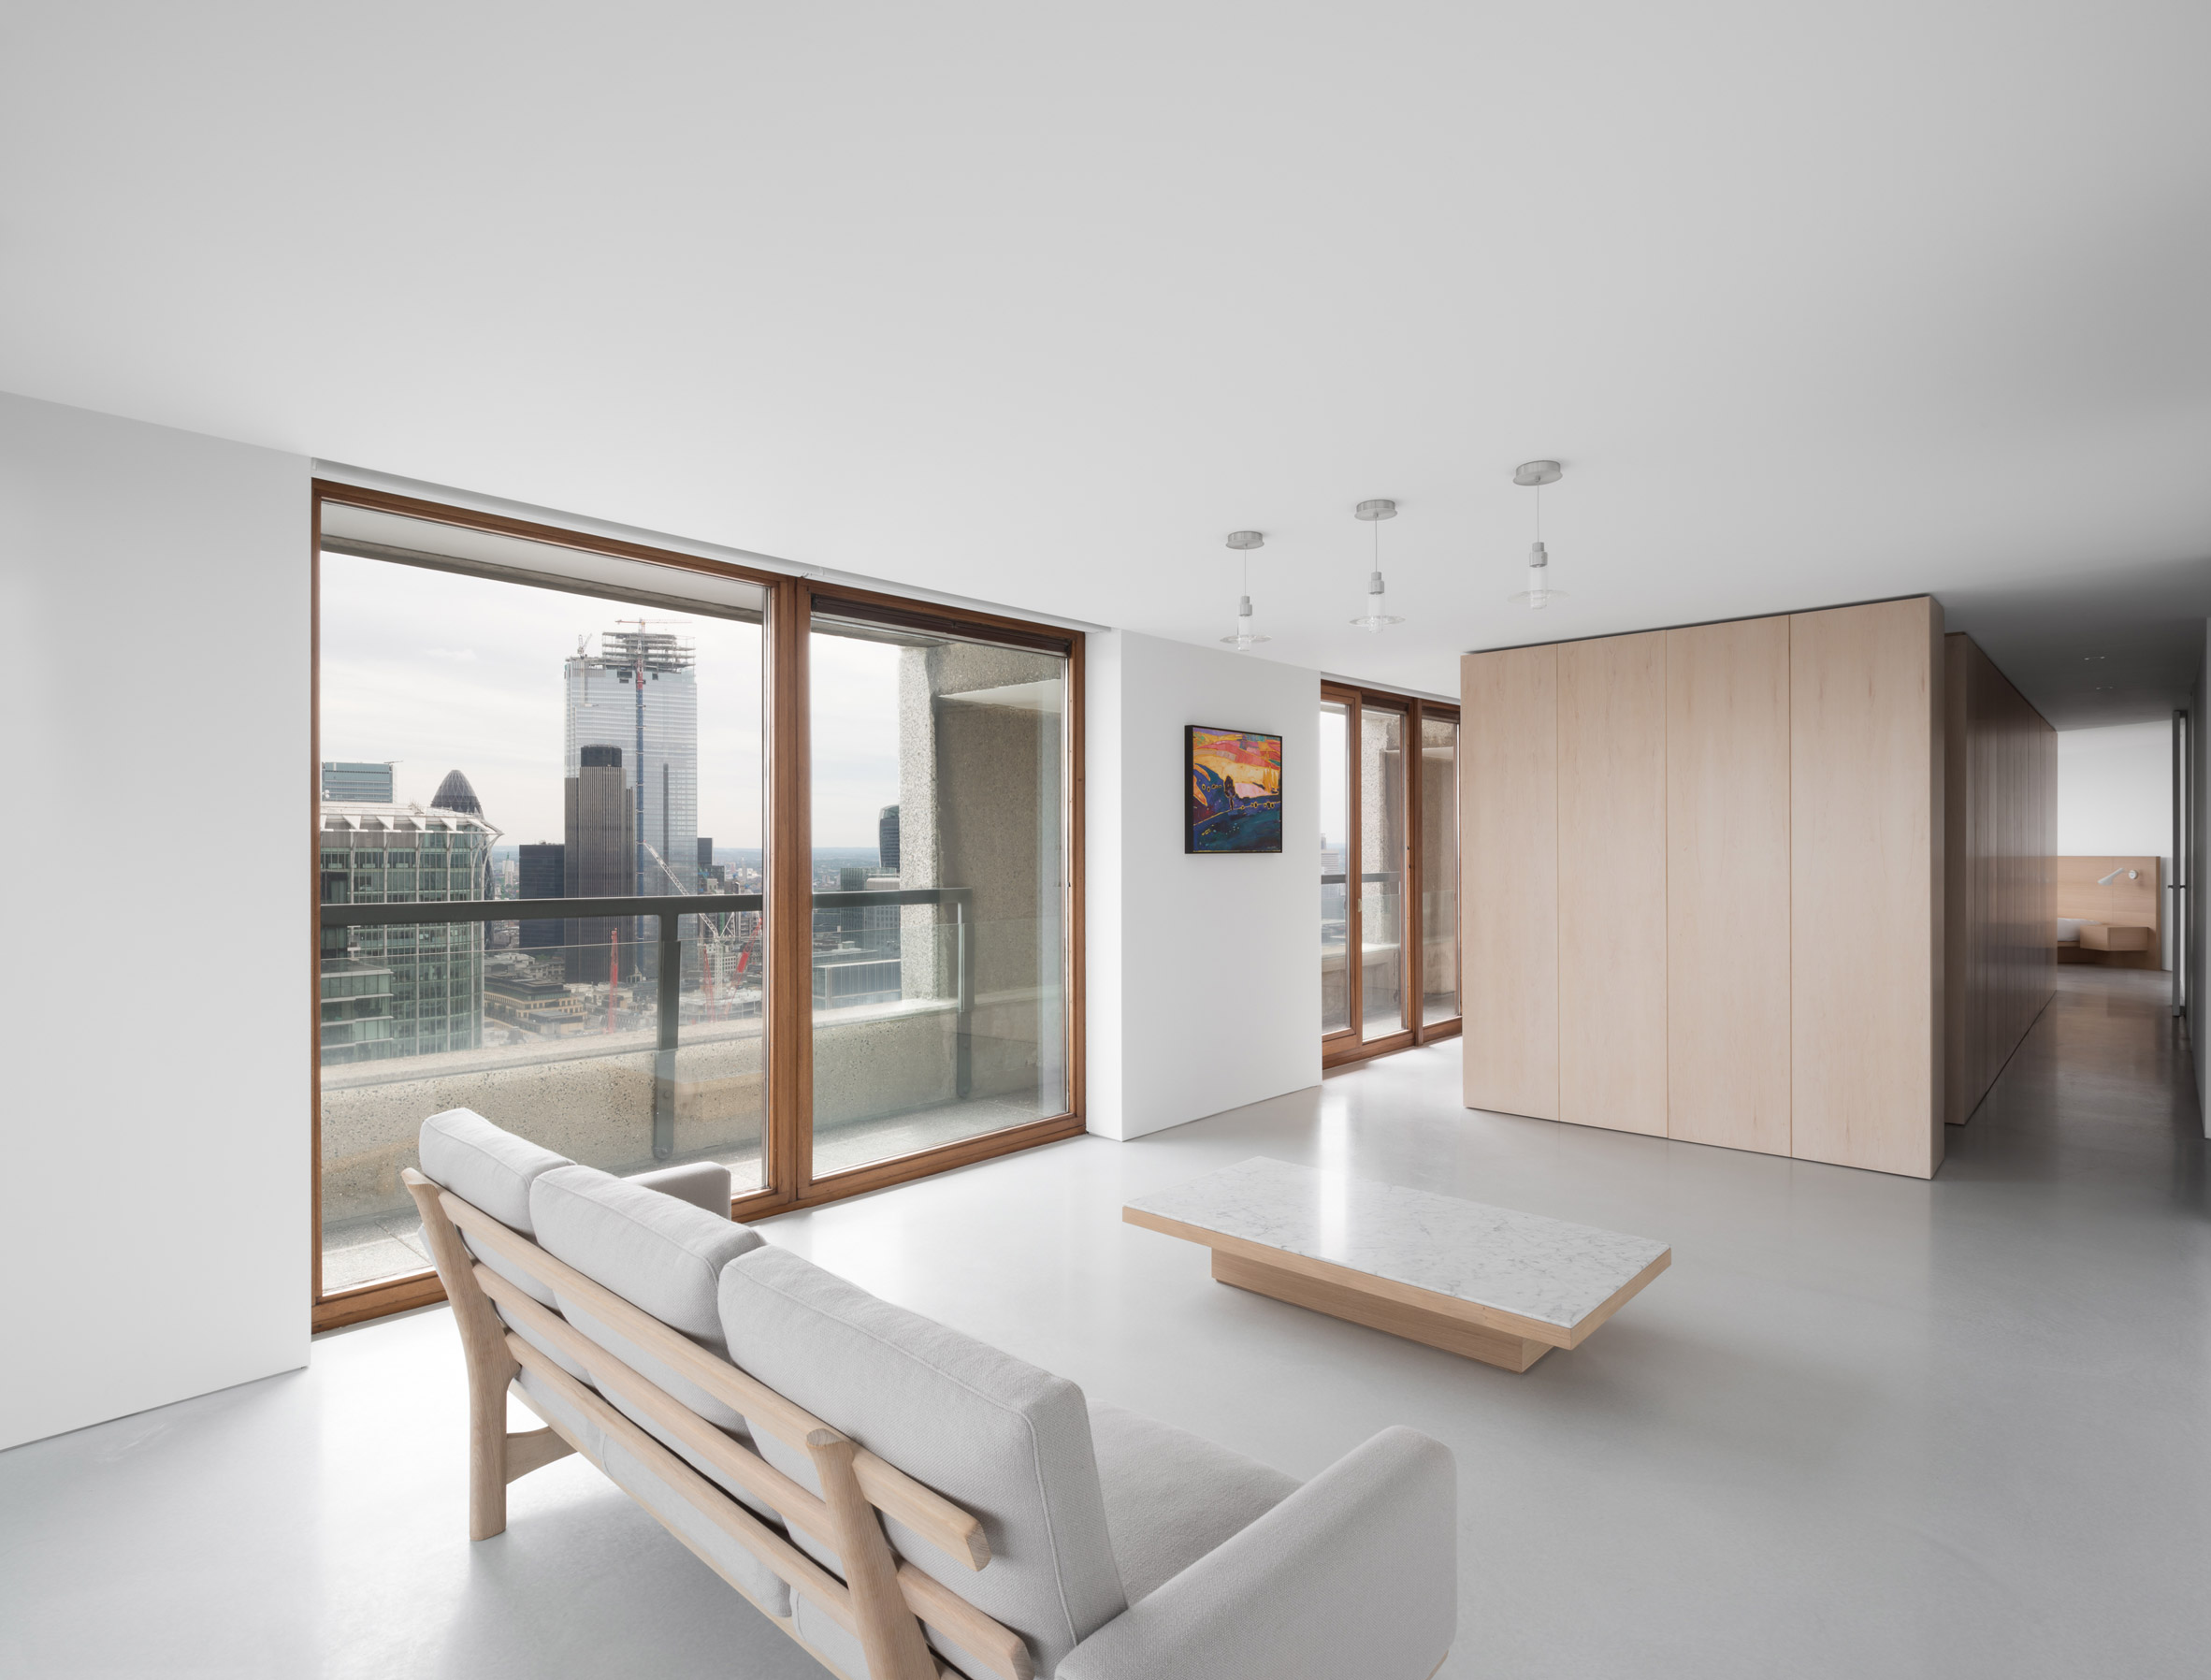 Barbican apartment designed by John Pawson